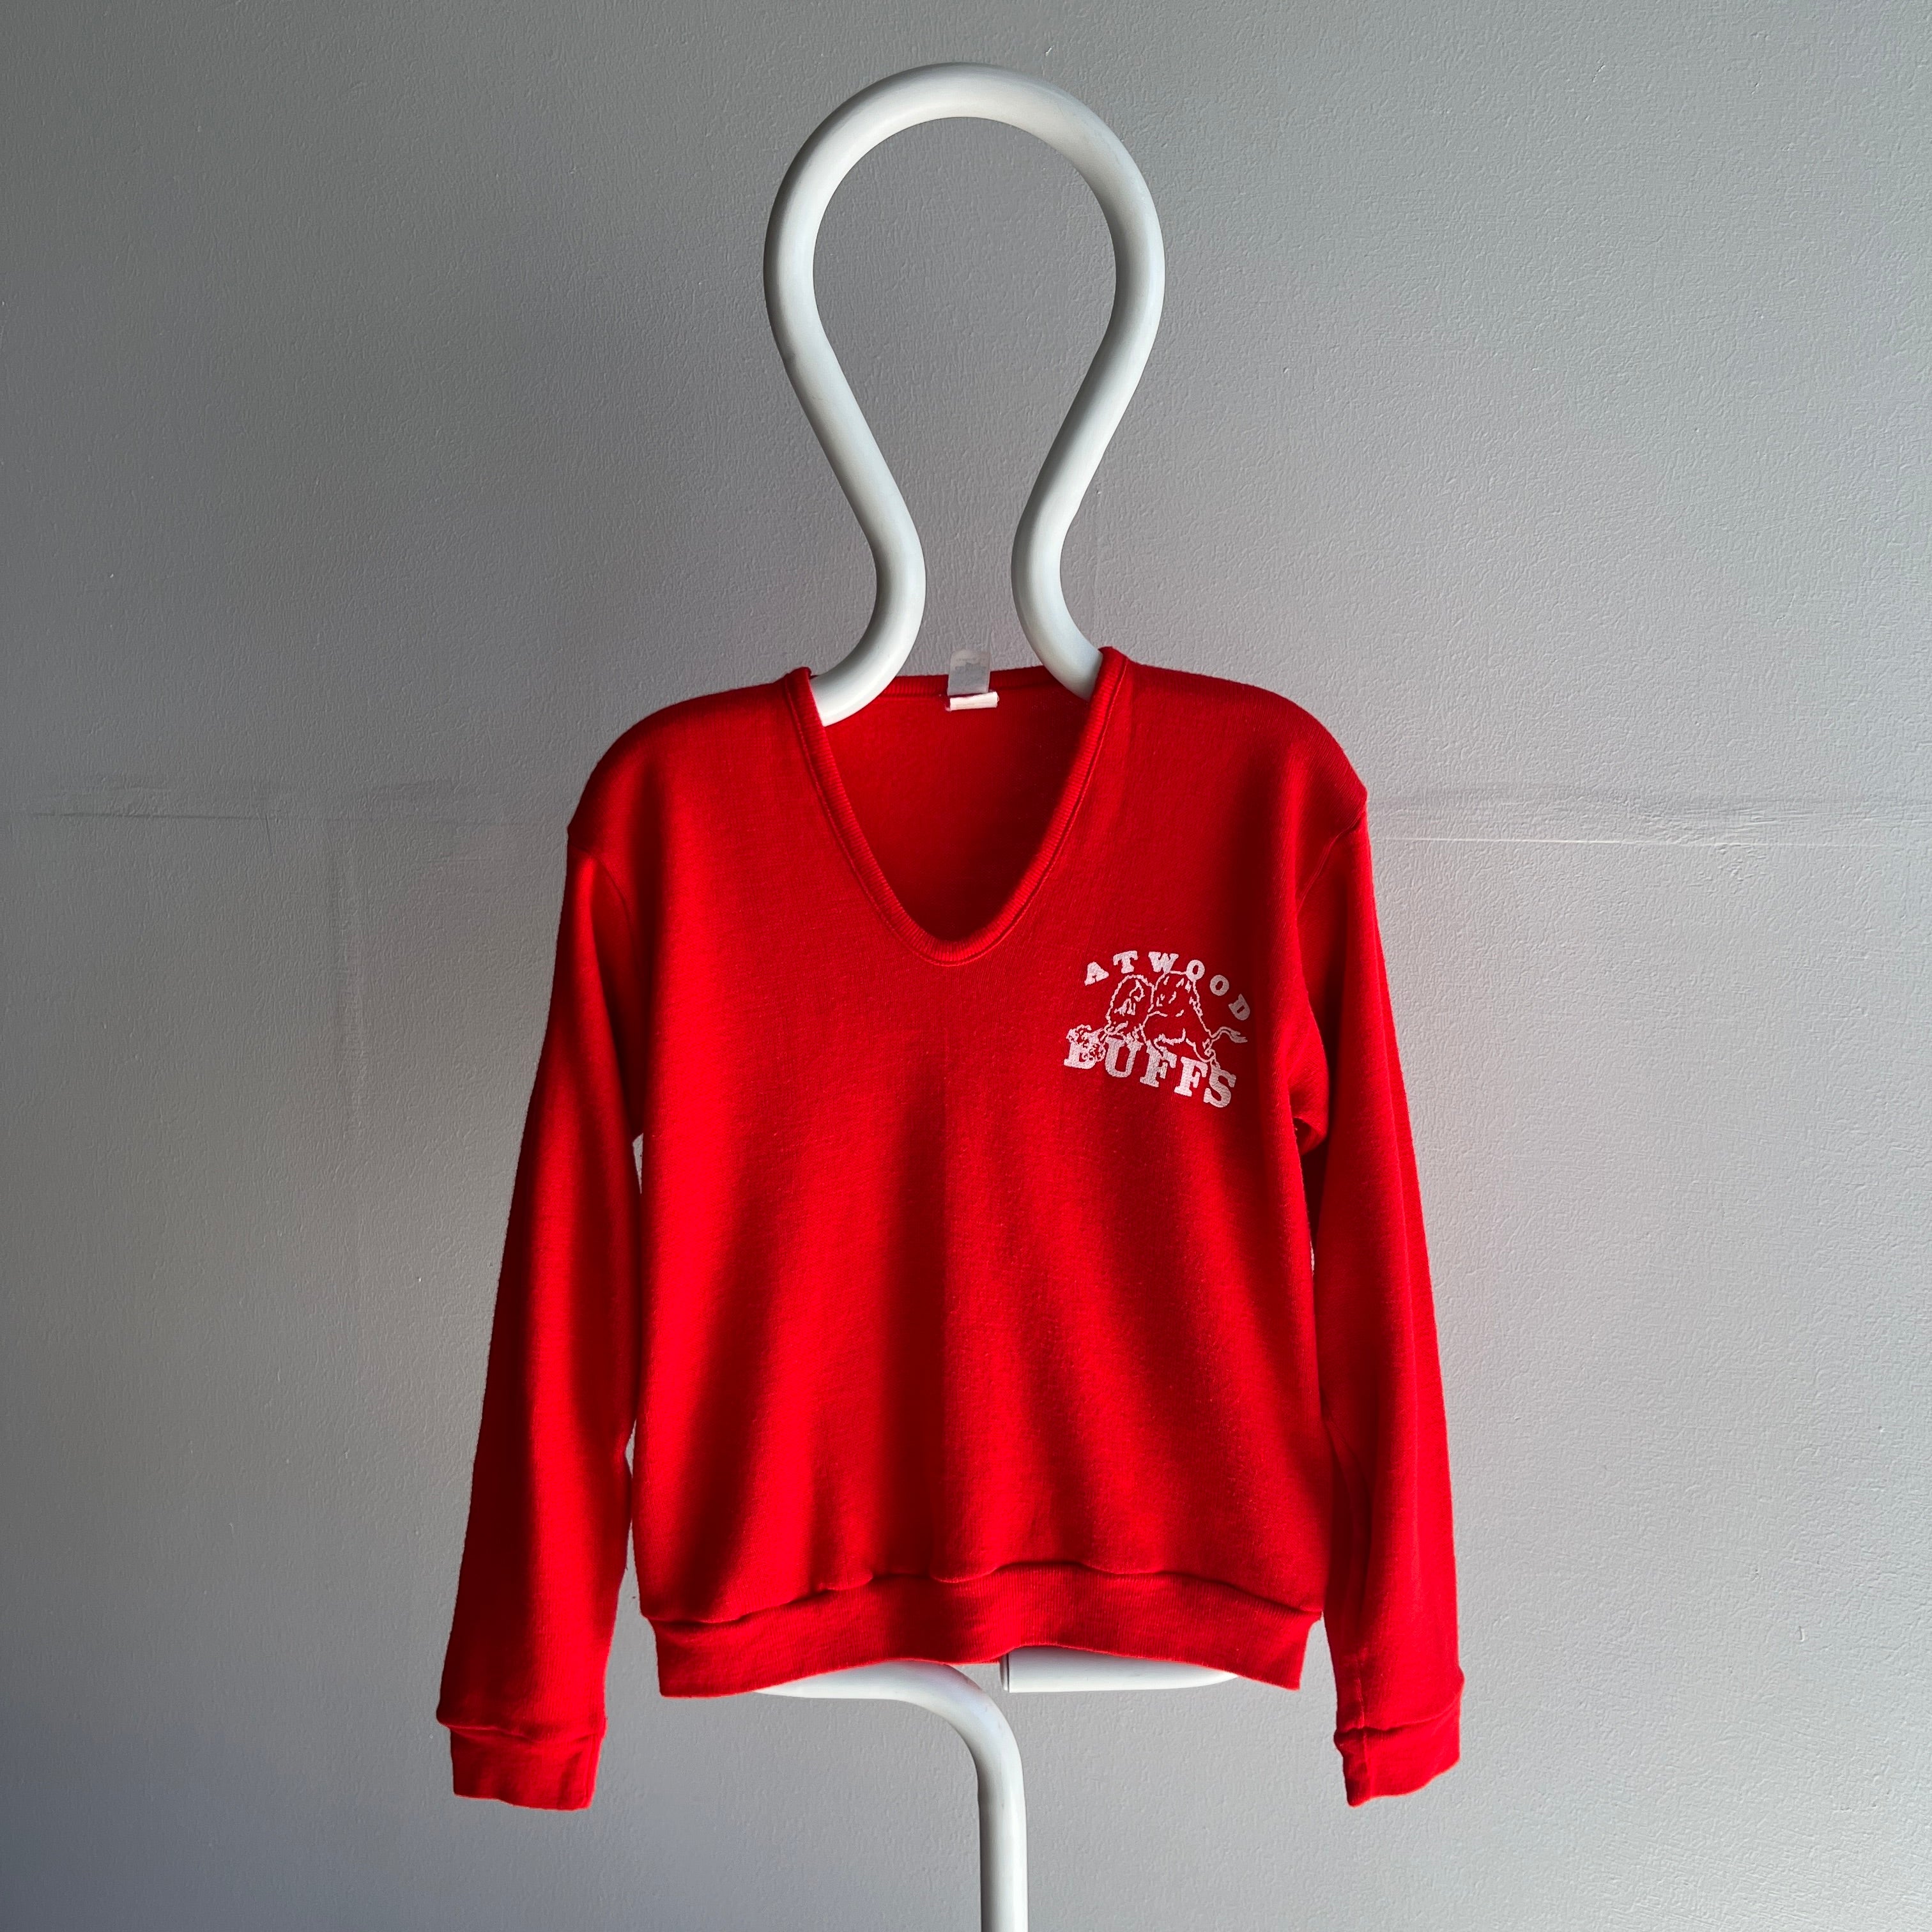 1970s Atwood Buffs V-Neck Barely Worn Sweater/Sweatshirt